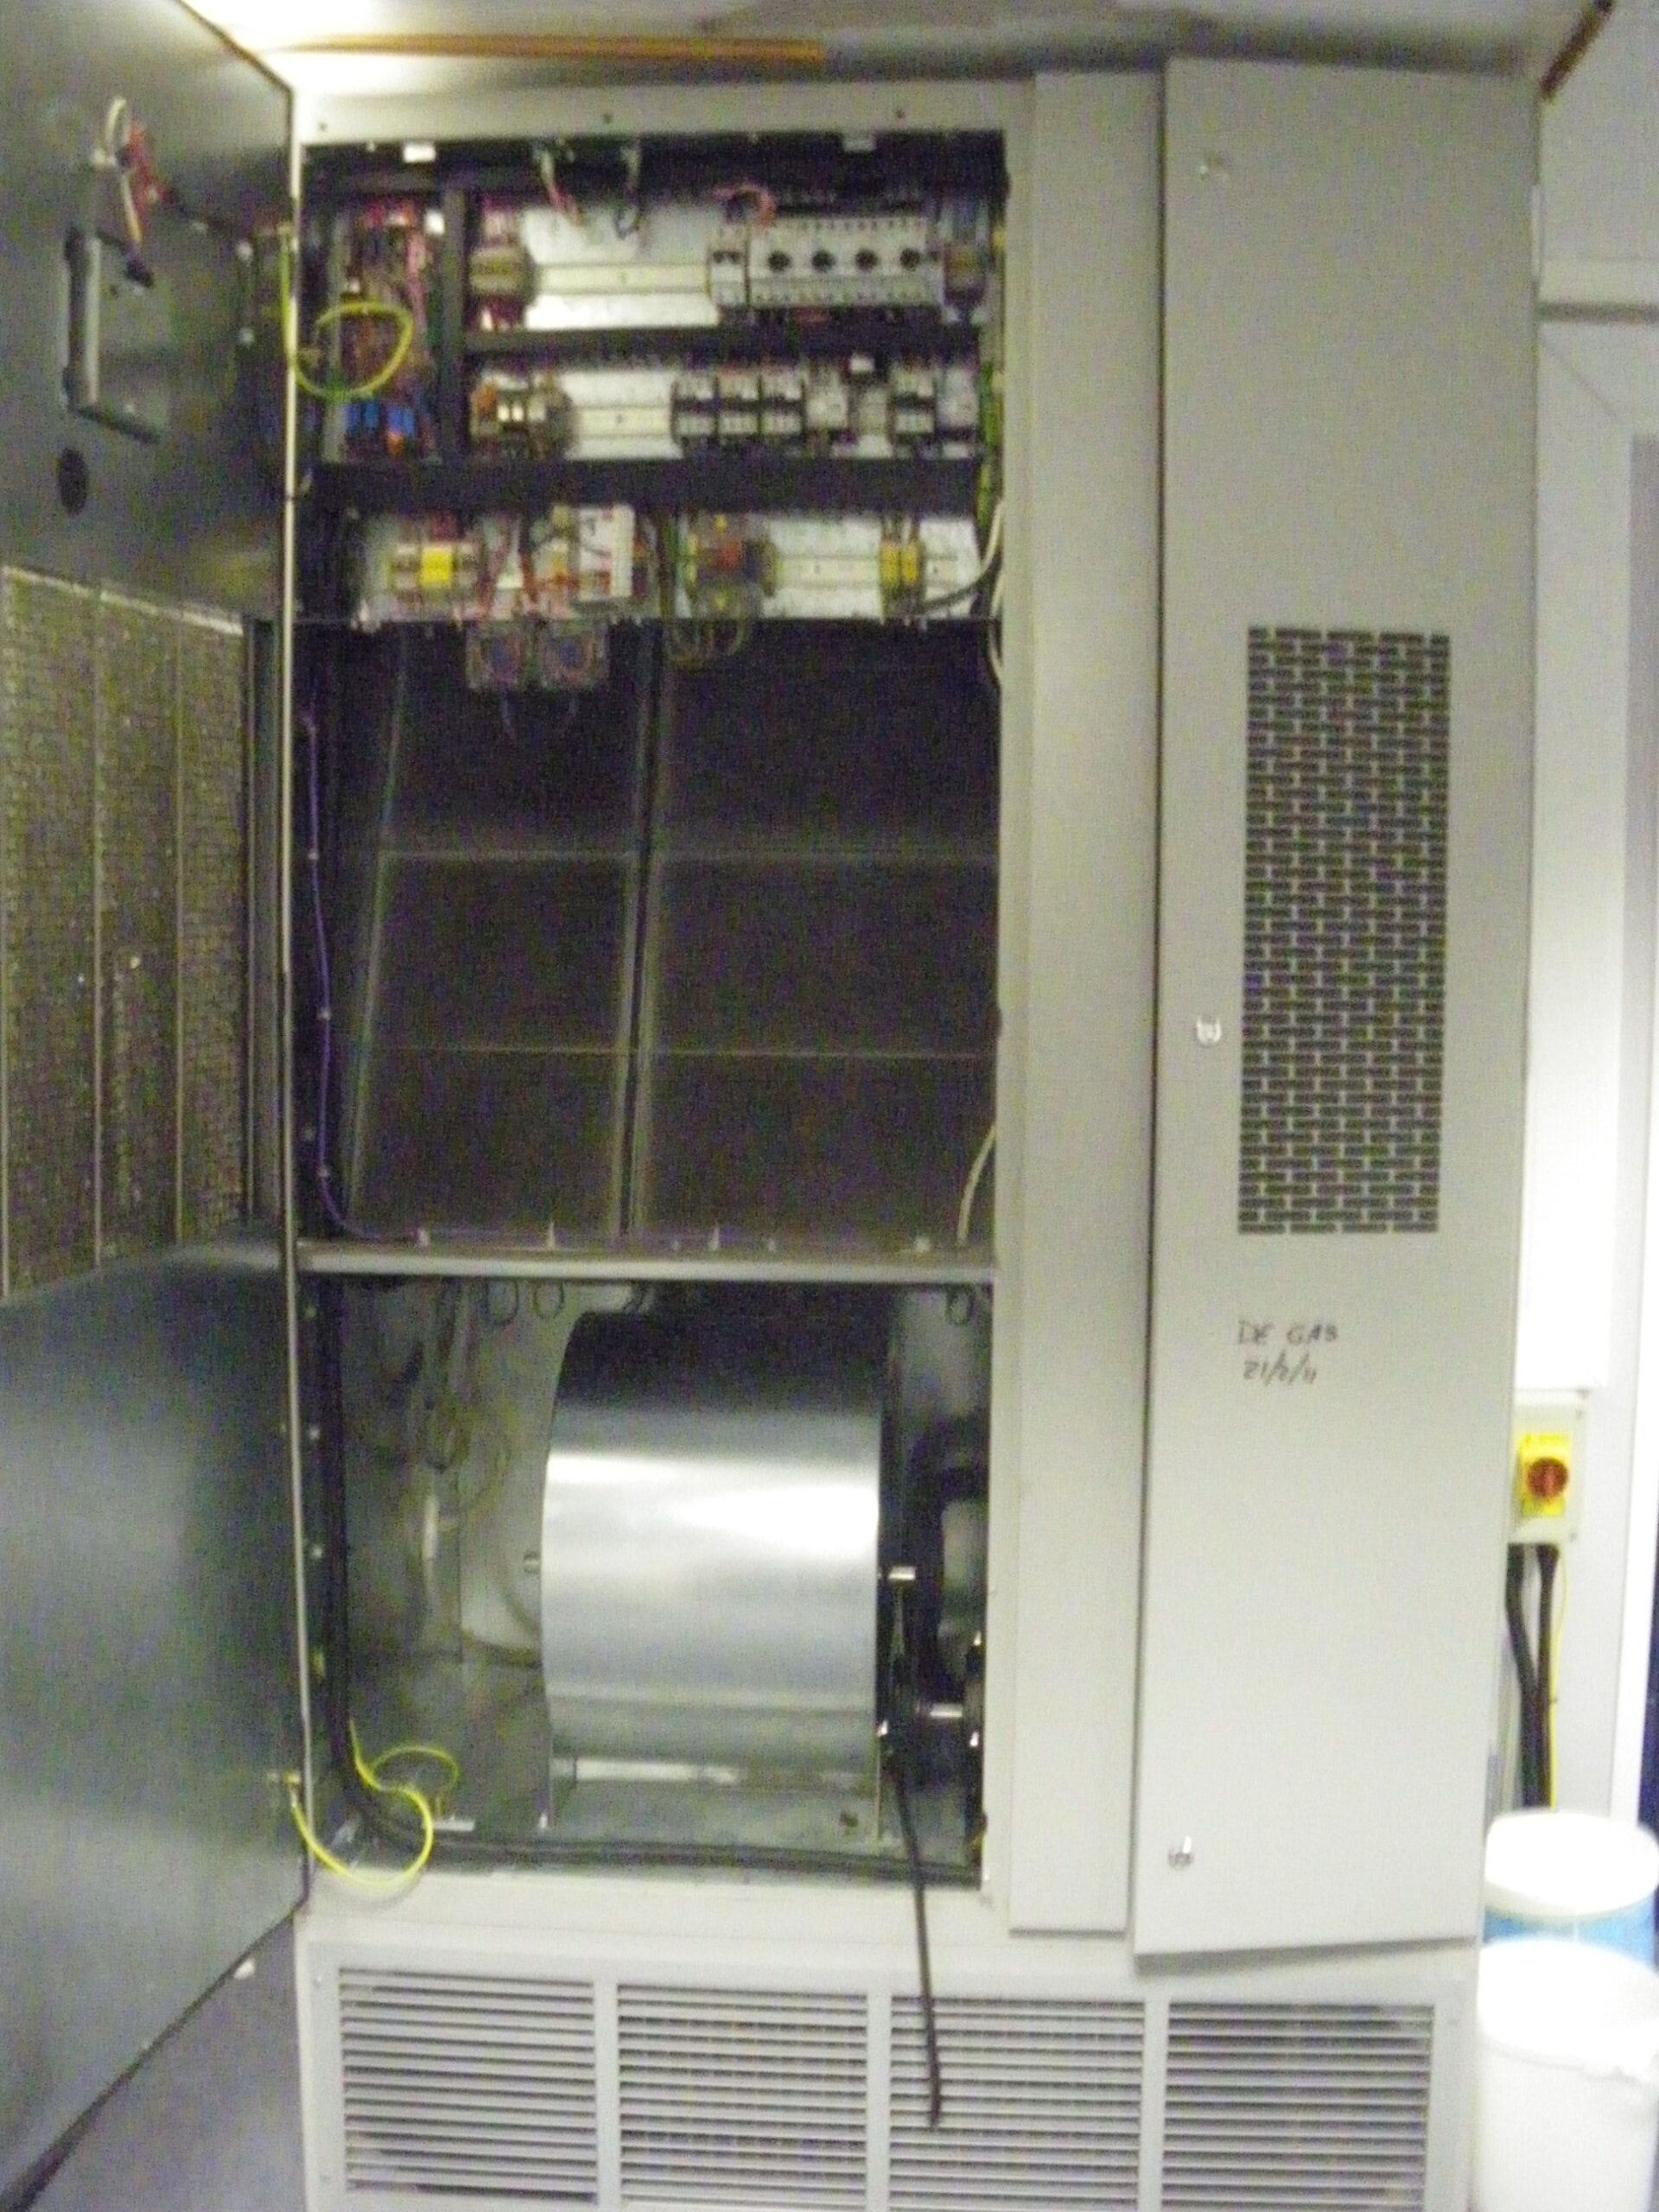 C016 computer room air con unit, 13 Sep 2011